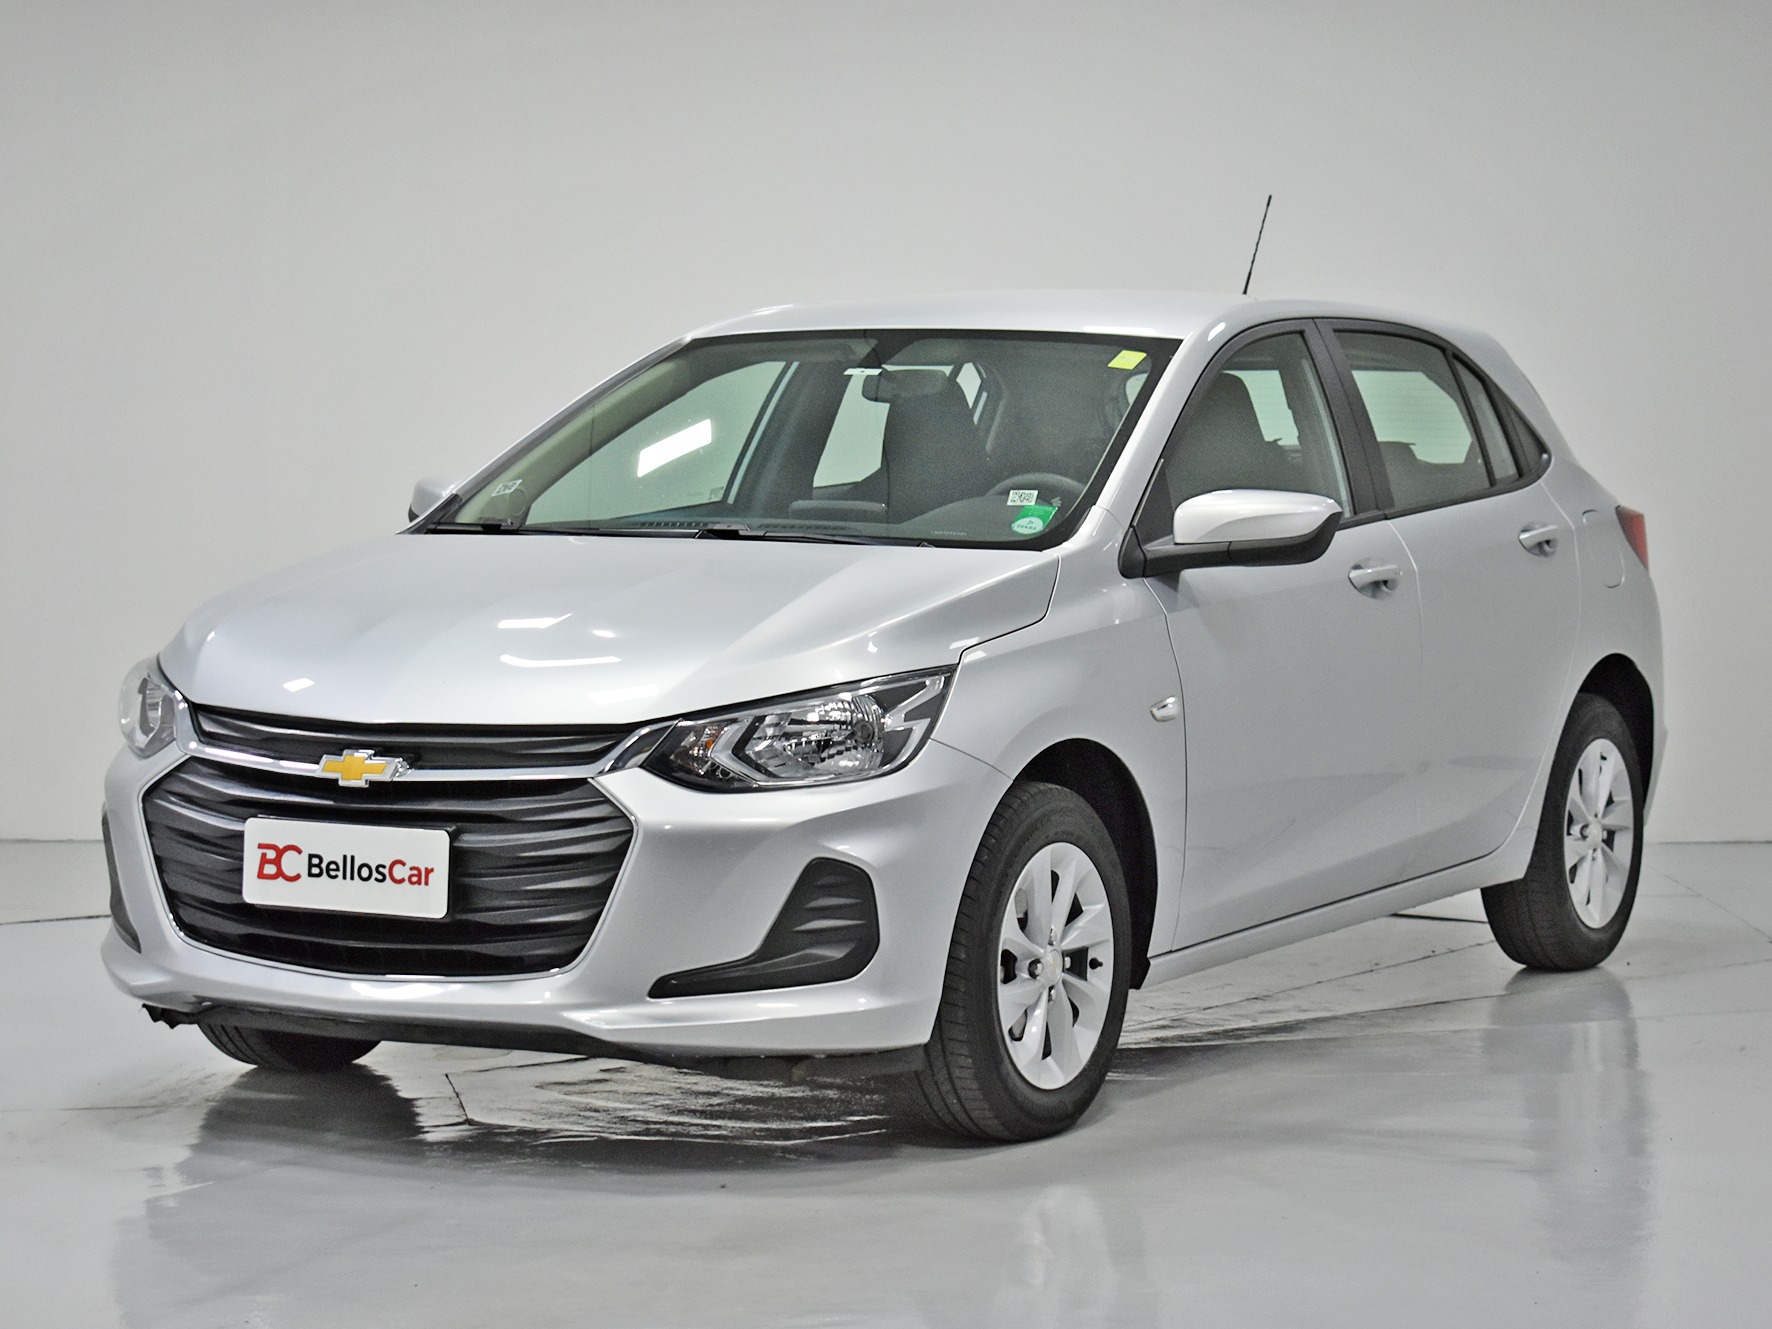 GM - Chevrolet ONIX - HATCH PREM. 1.0 12V TB Flex 5p Aut. - 2021/20212022 -  Jacarezinho - PR